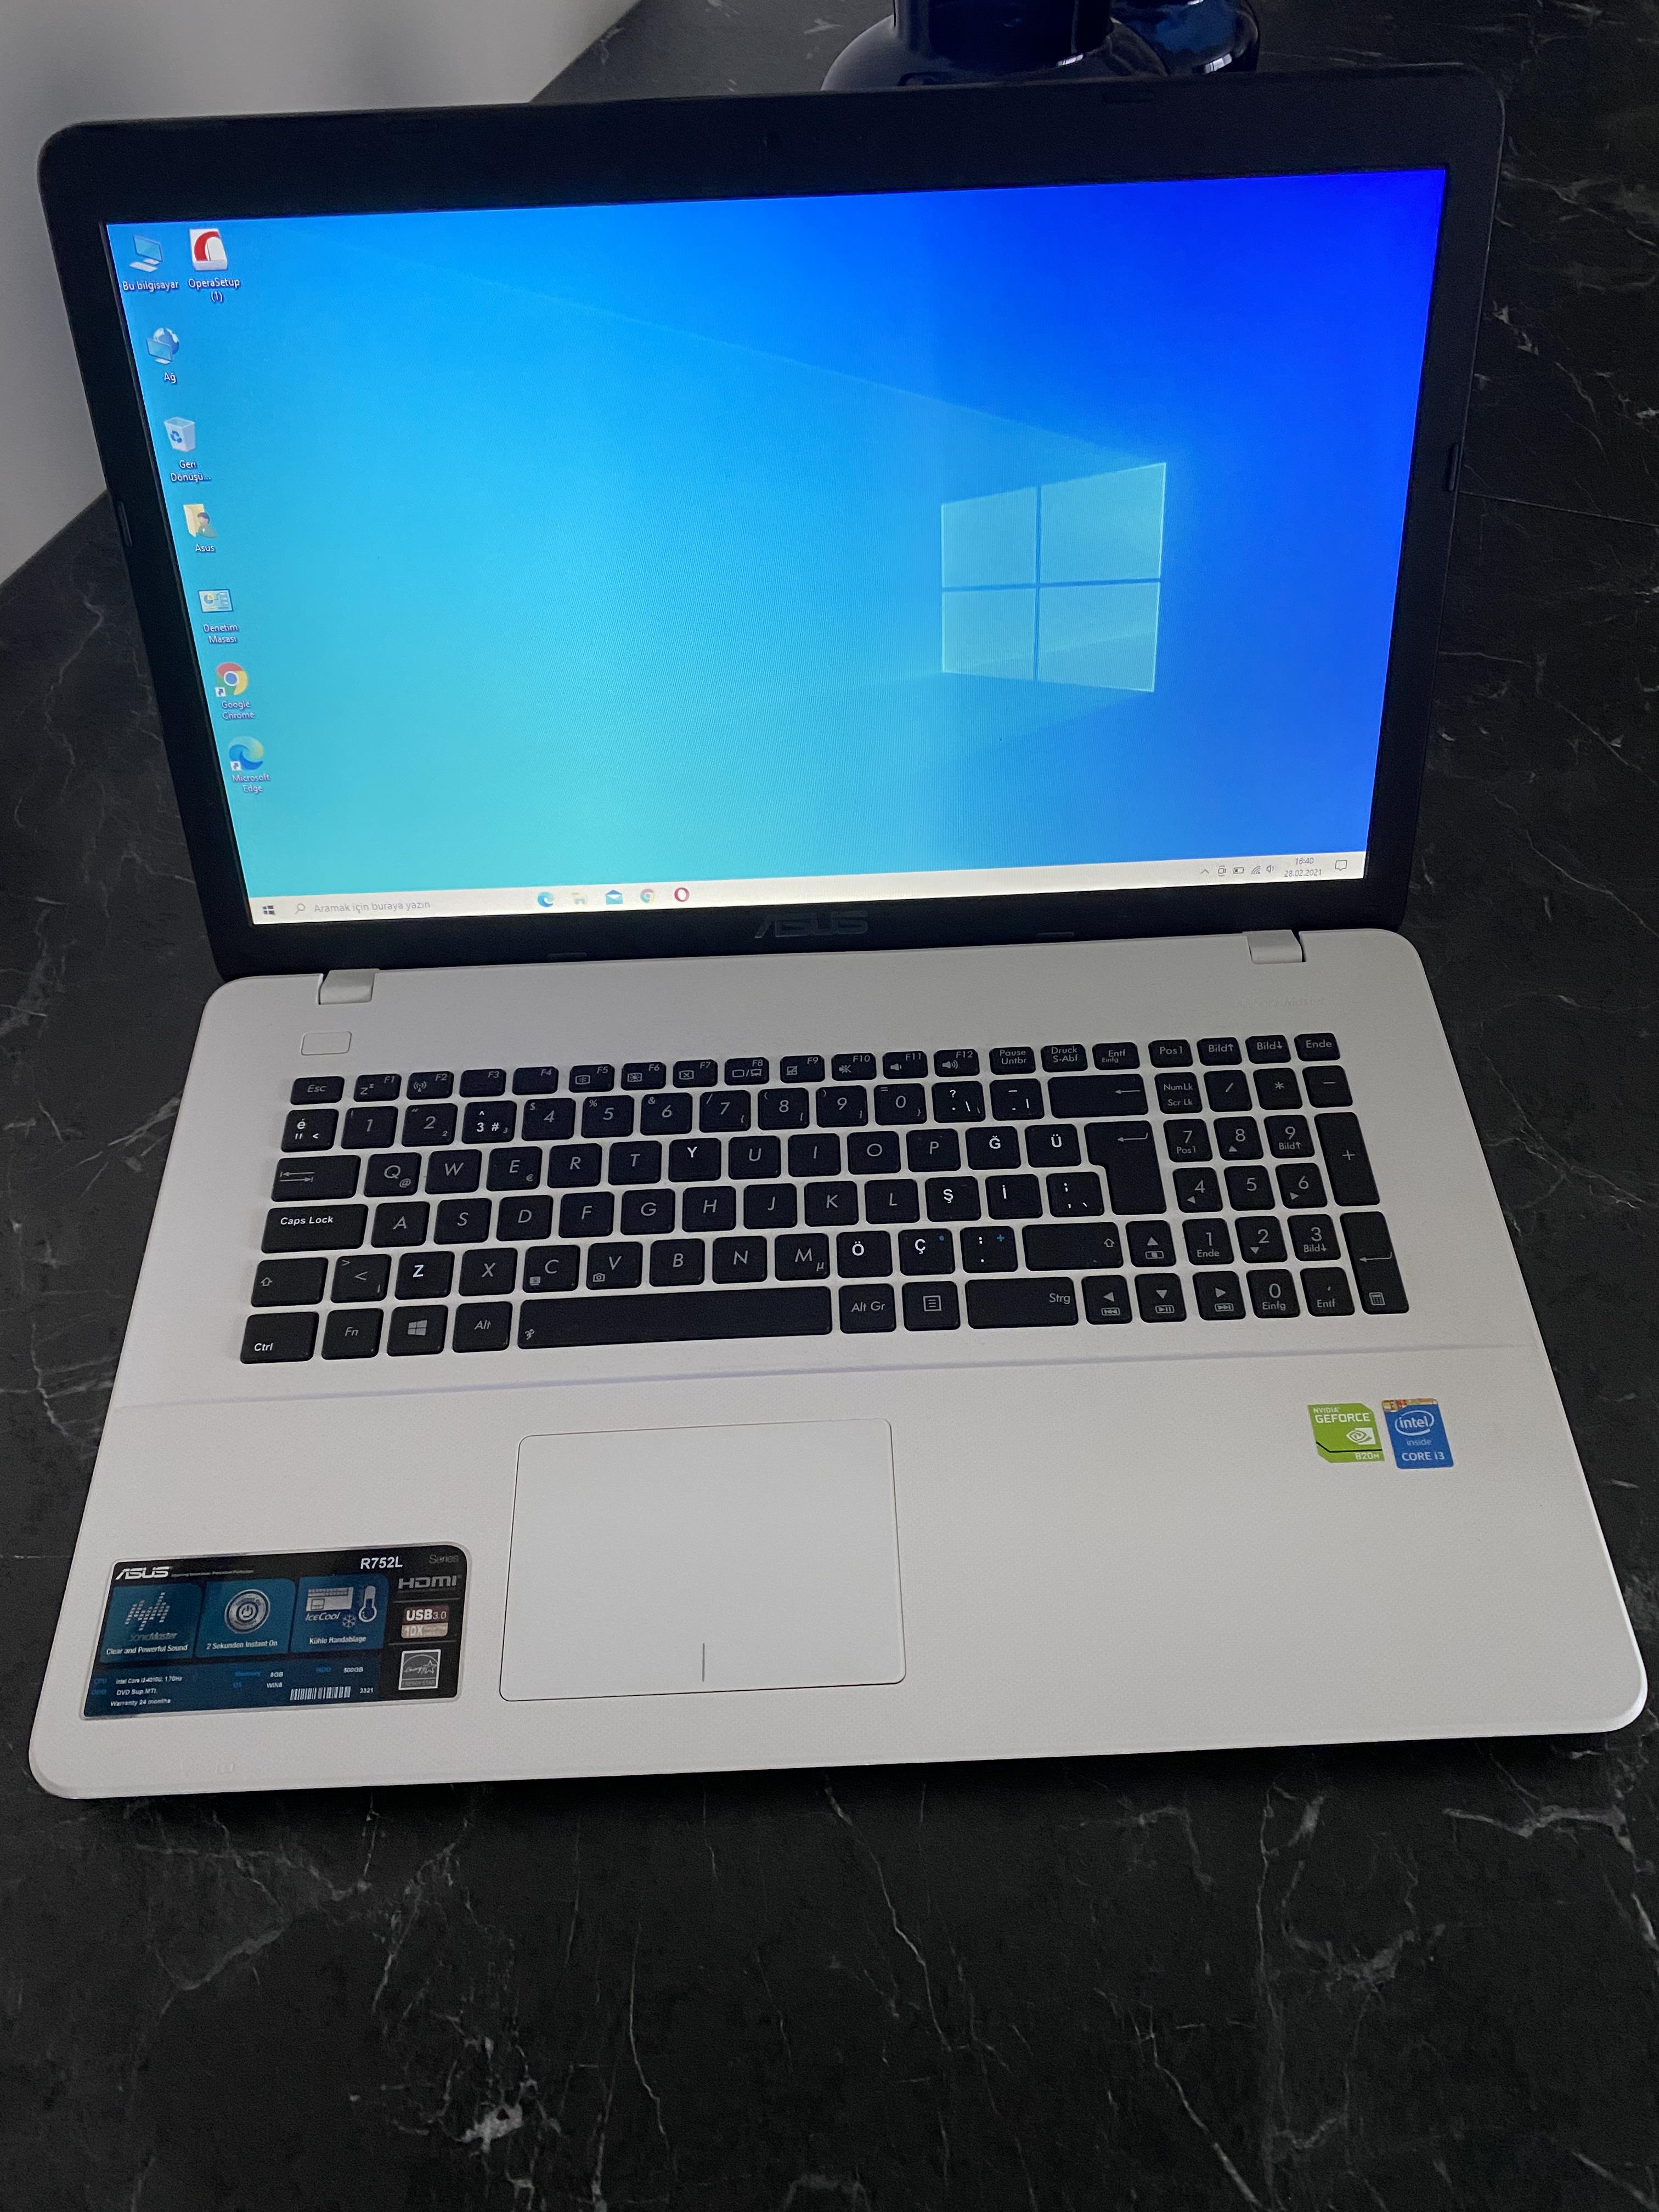 Asus 17.3 inç Laptop-i3 (ssd + harici ekran kartı) 2900 tl | DonanımHaber  Forum